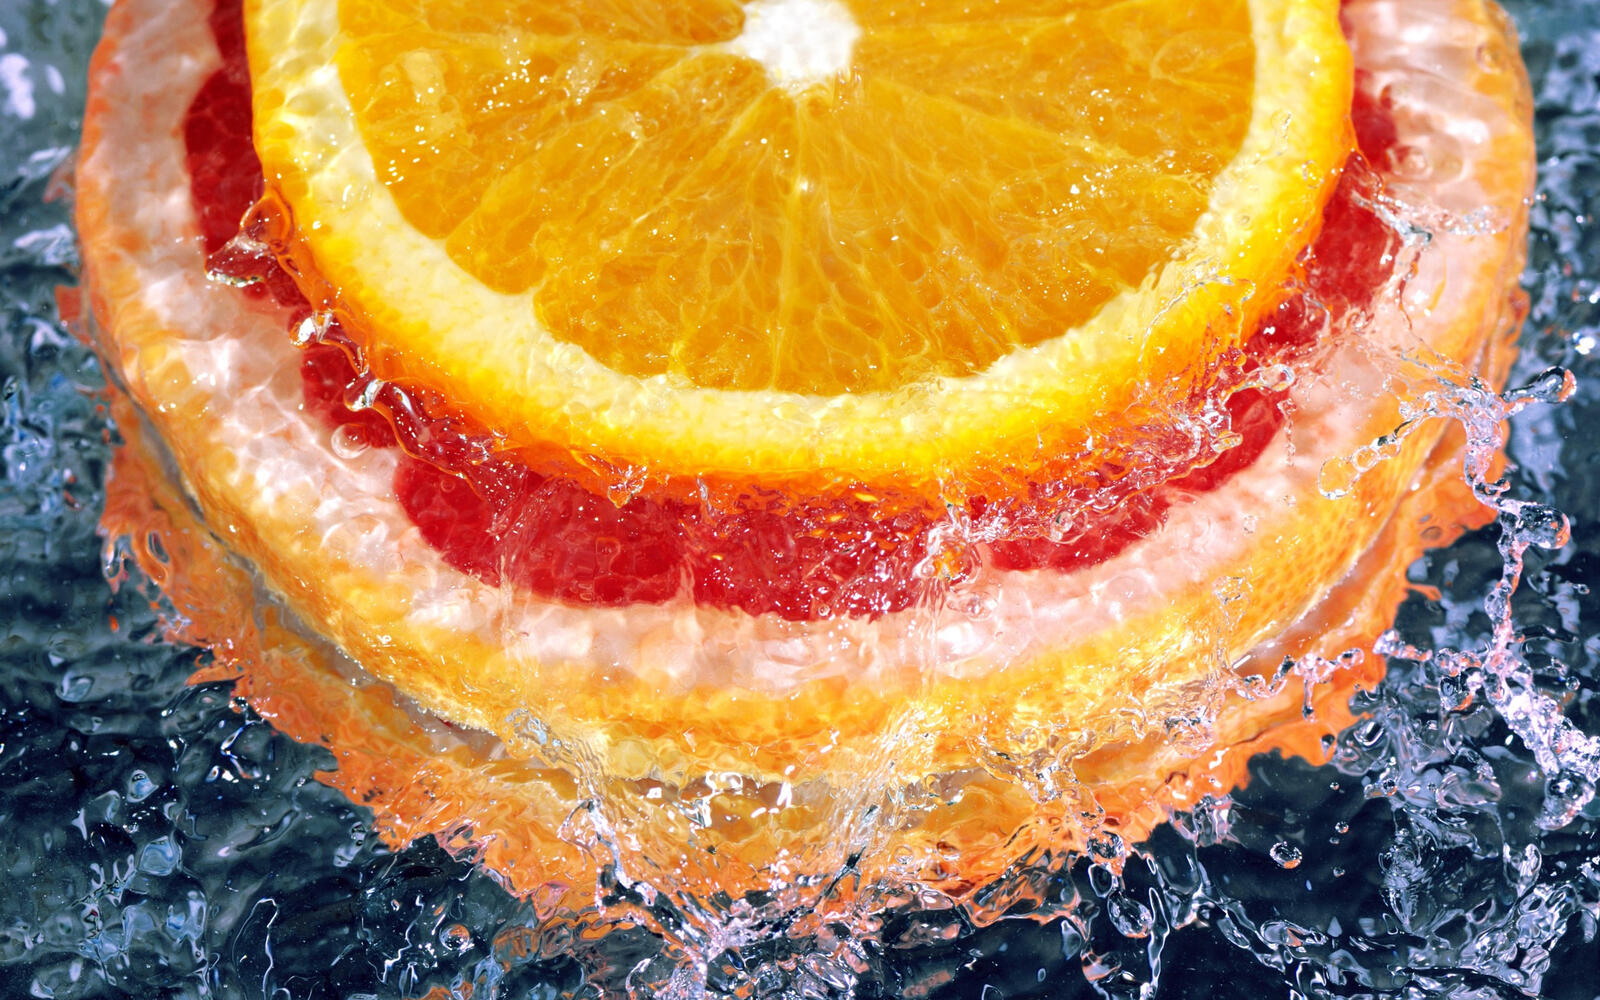 Wallpapers orange grapefruit citrus fruits on the desktop